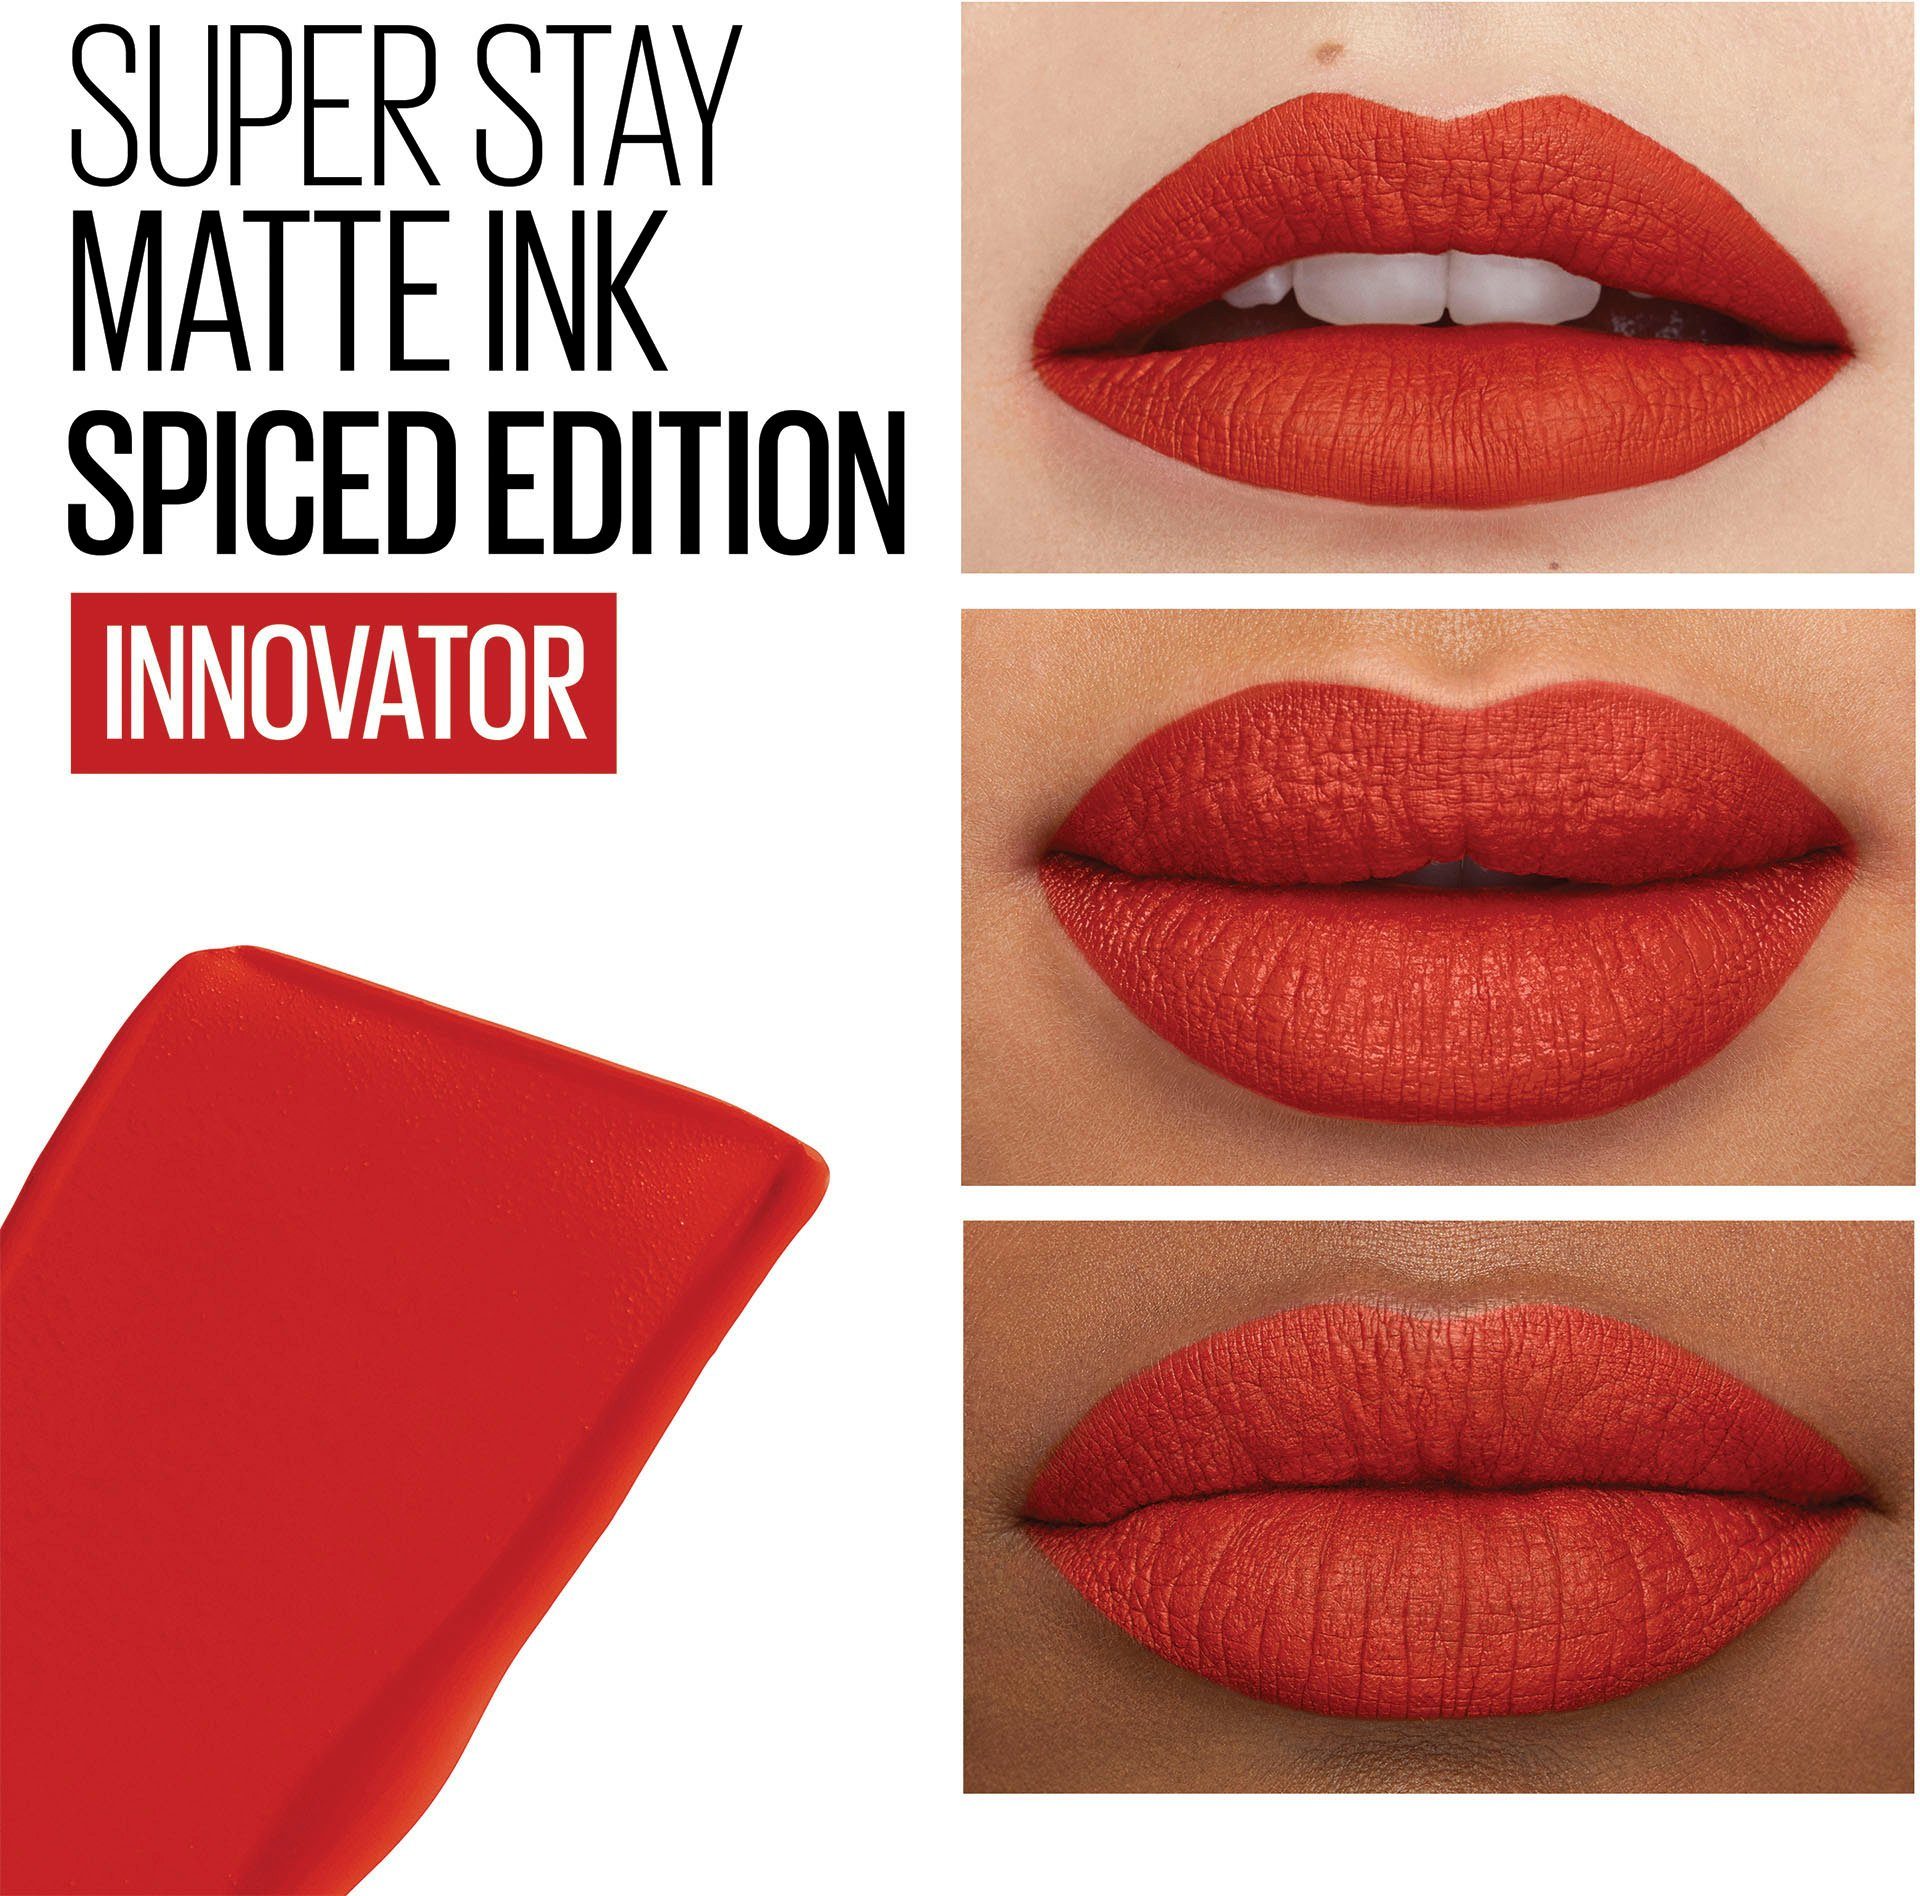 Matte NEW Lippenstift Super 330 YORK Up Ink Innovator MAYBELLINE Stay Spiced